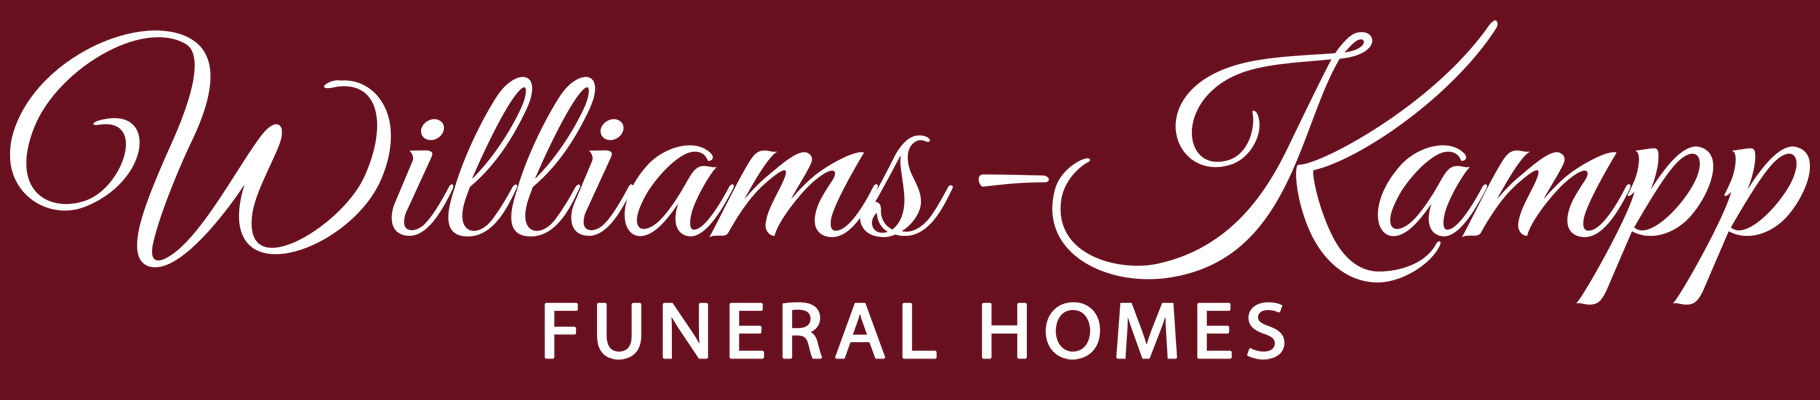 Williams Kampp Funeral Home Logo